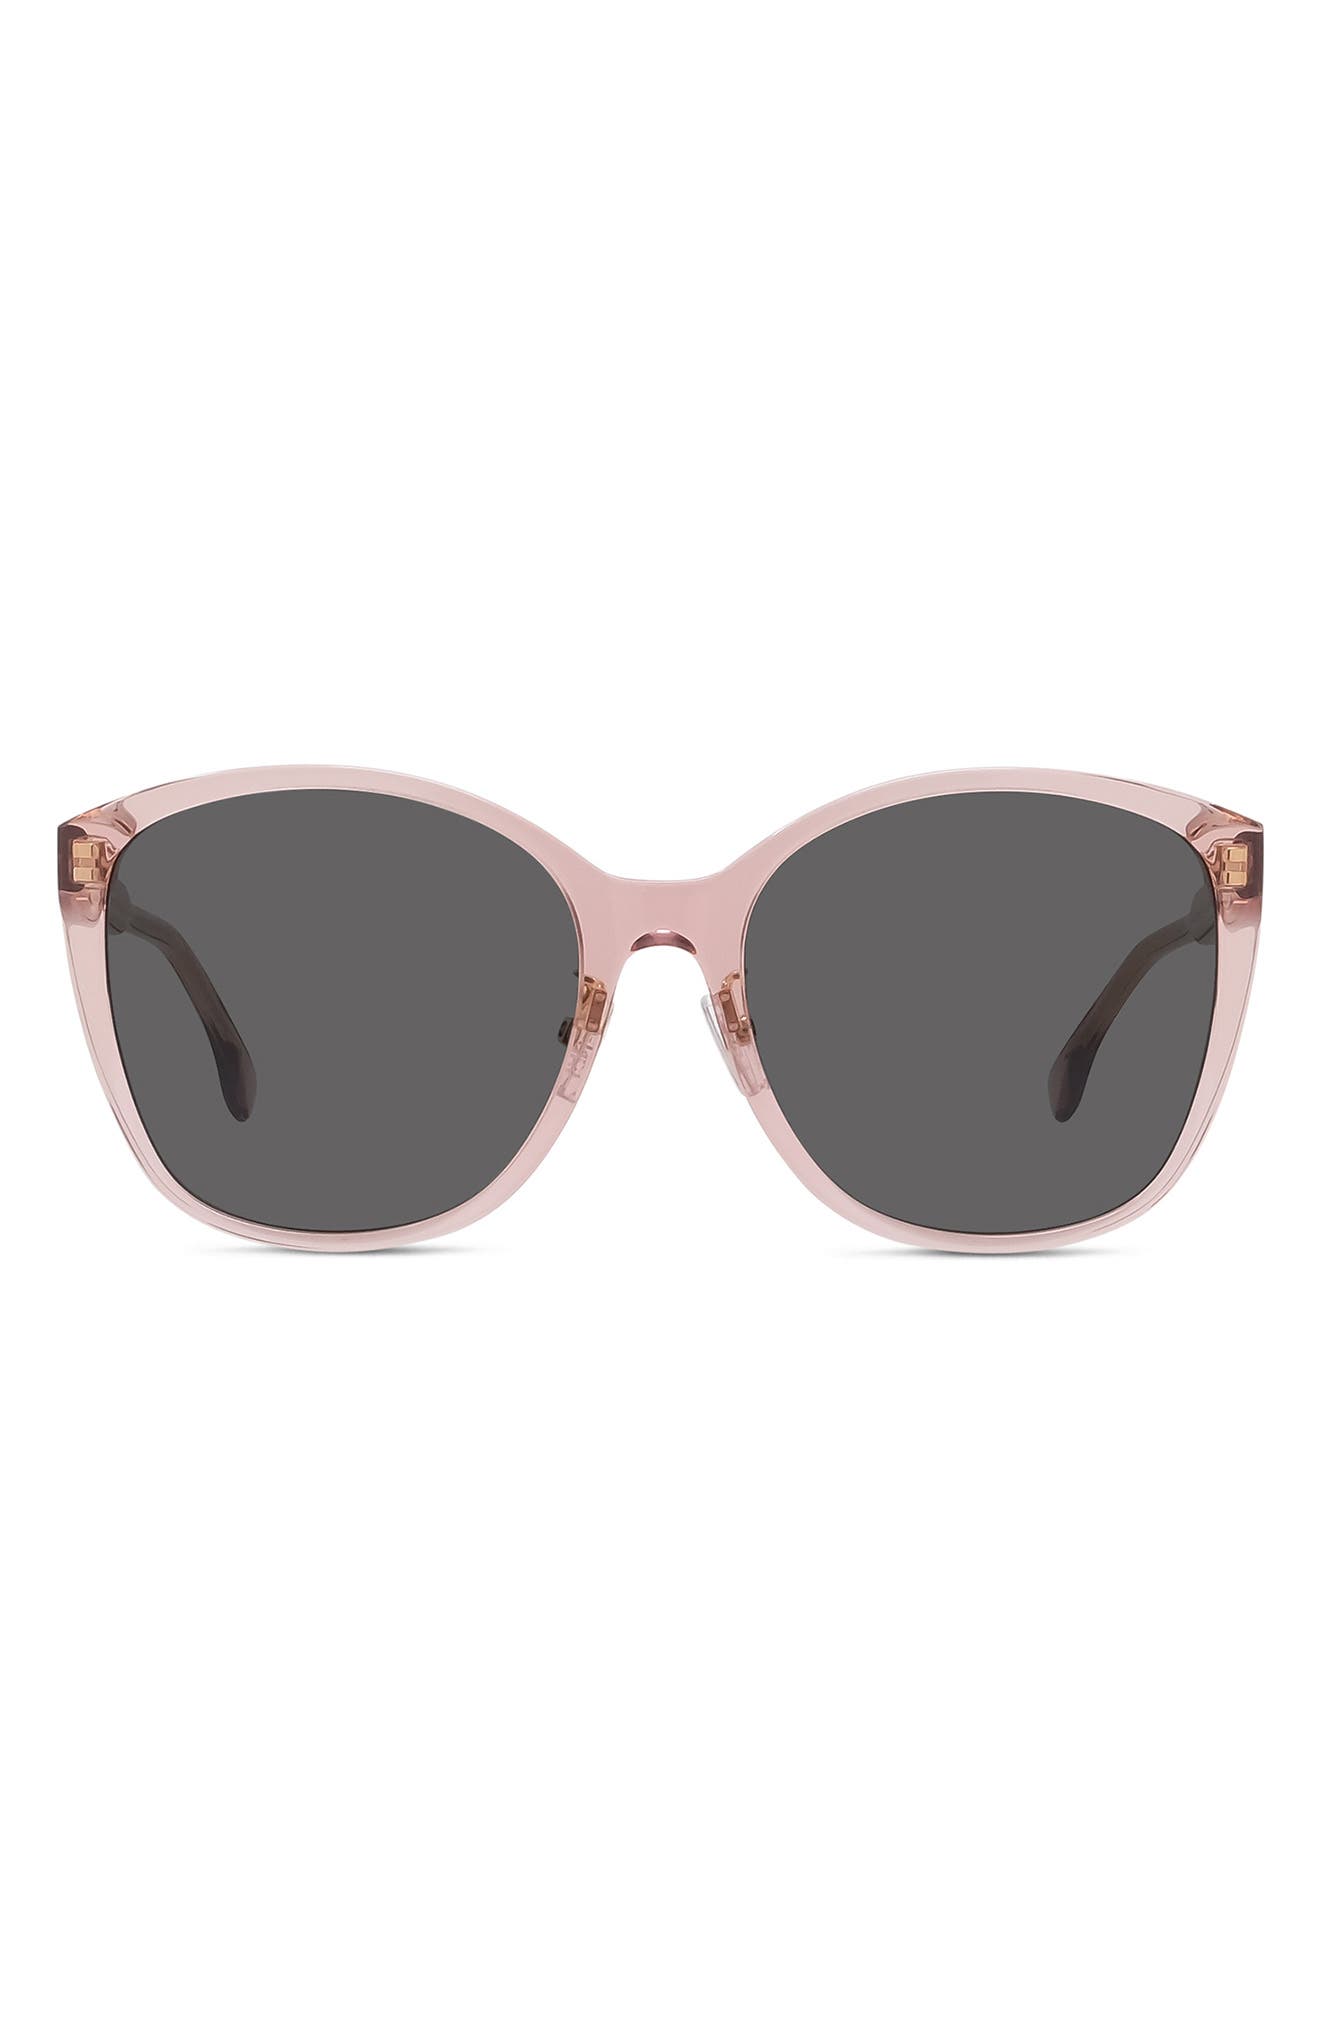 Fendi Fine 53mm Cat Eye Sunglasses in Shiny Pink /Smoke at Nordstrom